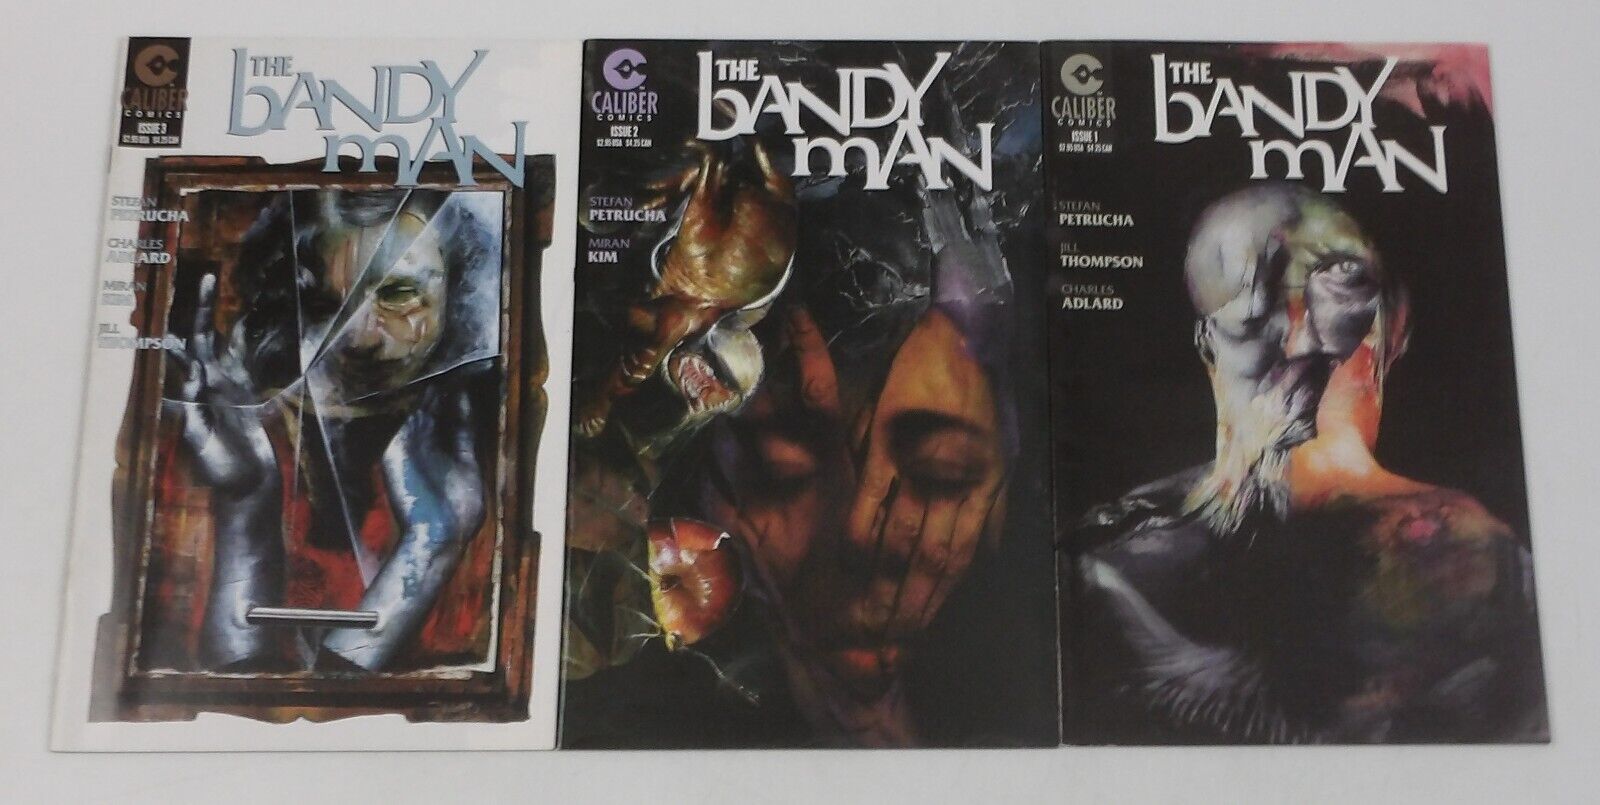 Bandy Man #1-3 VF complete series - Stefan Petrucha - Jill Thompson - 2 set